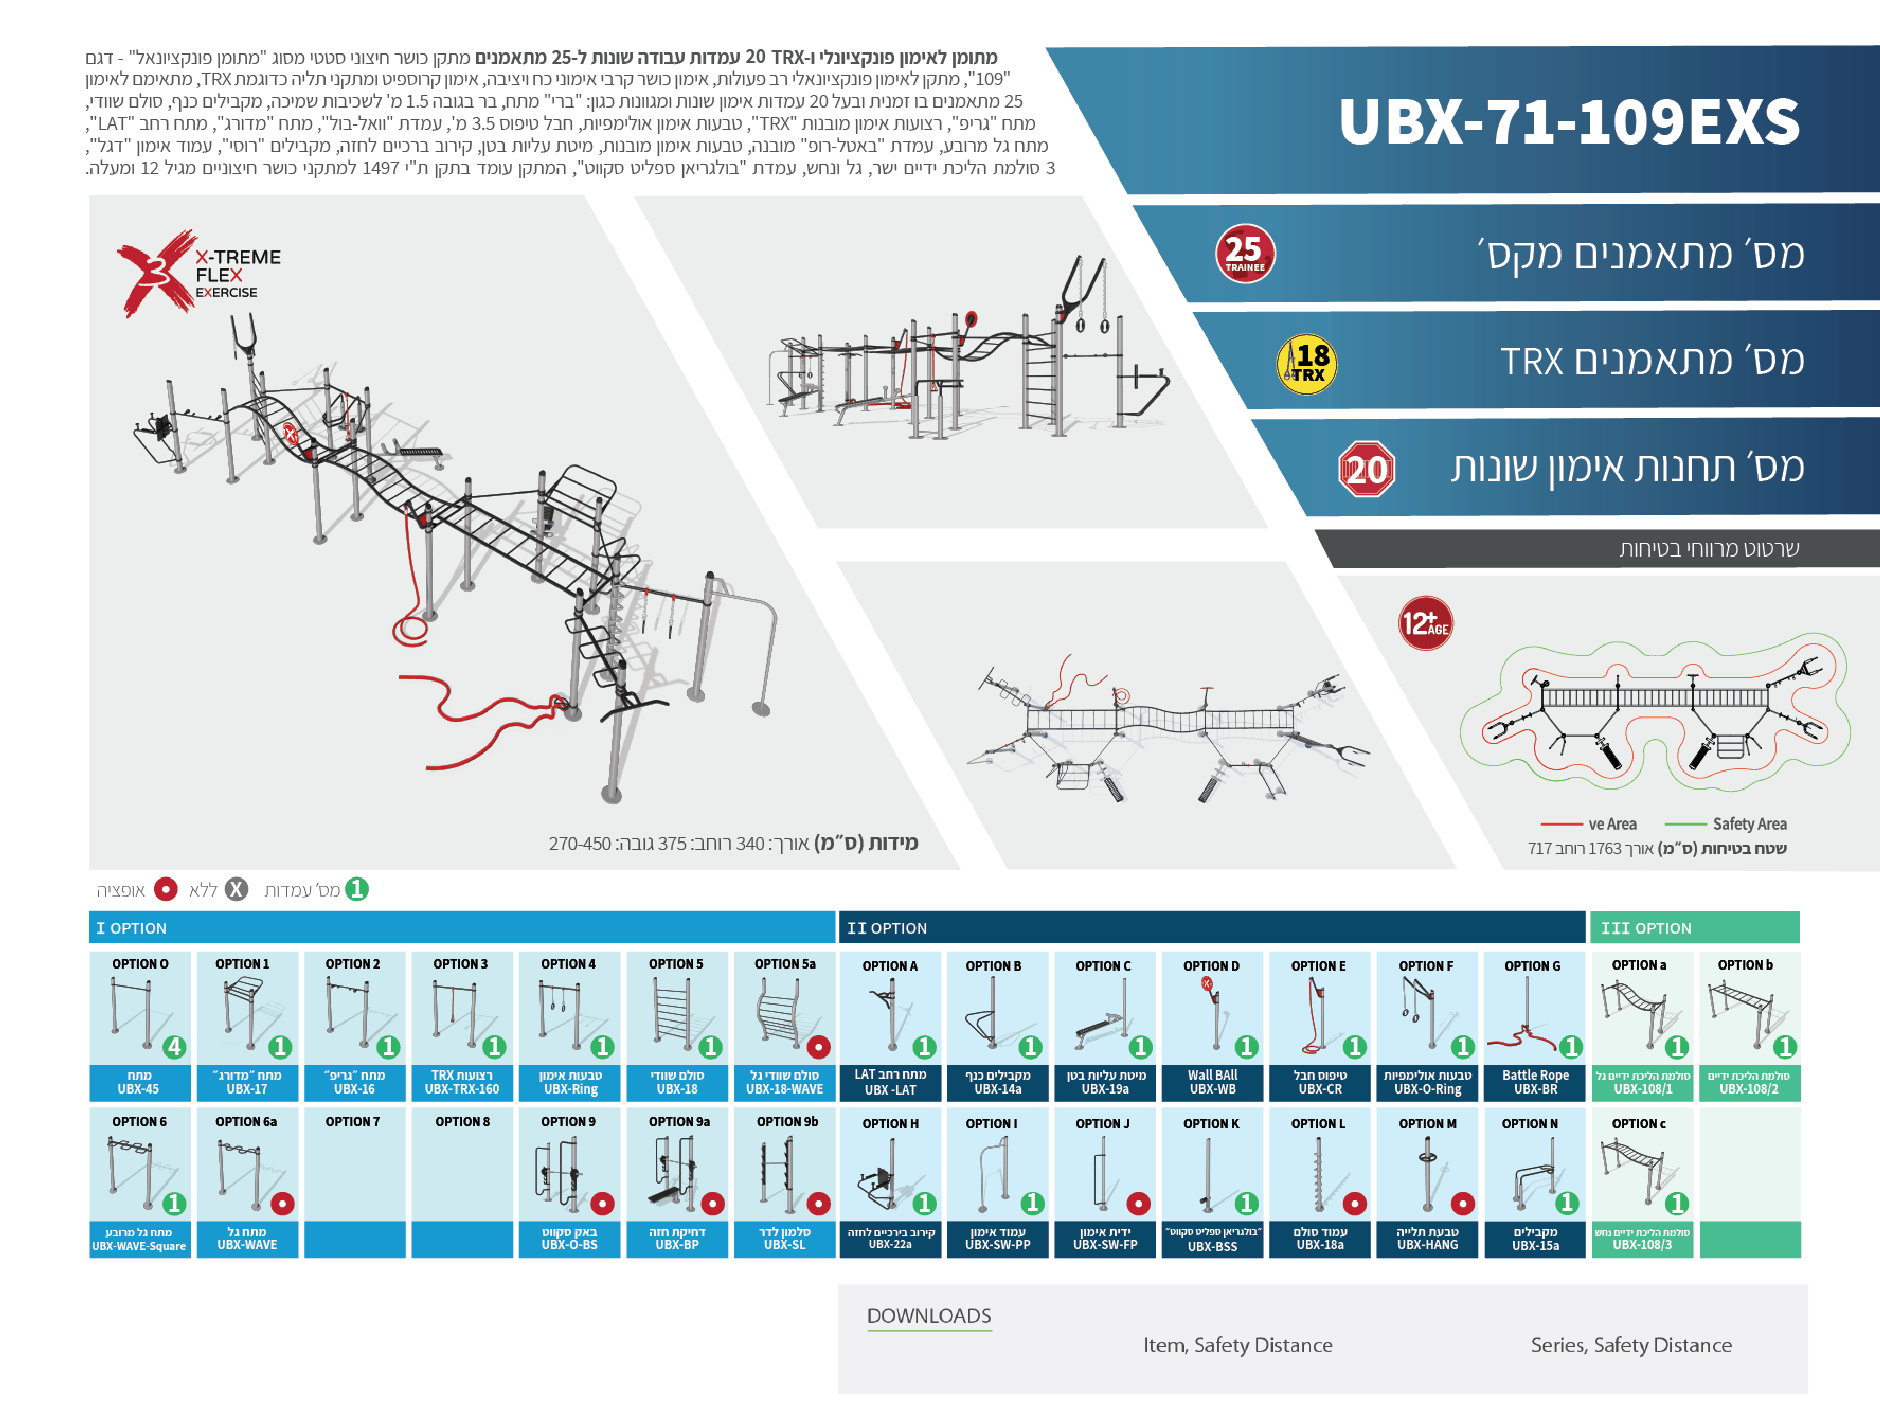 ubx-71-109 אורבניקס - מתקן כושר